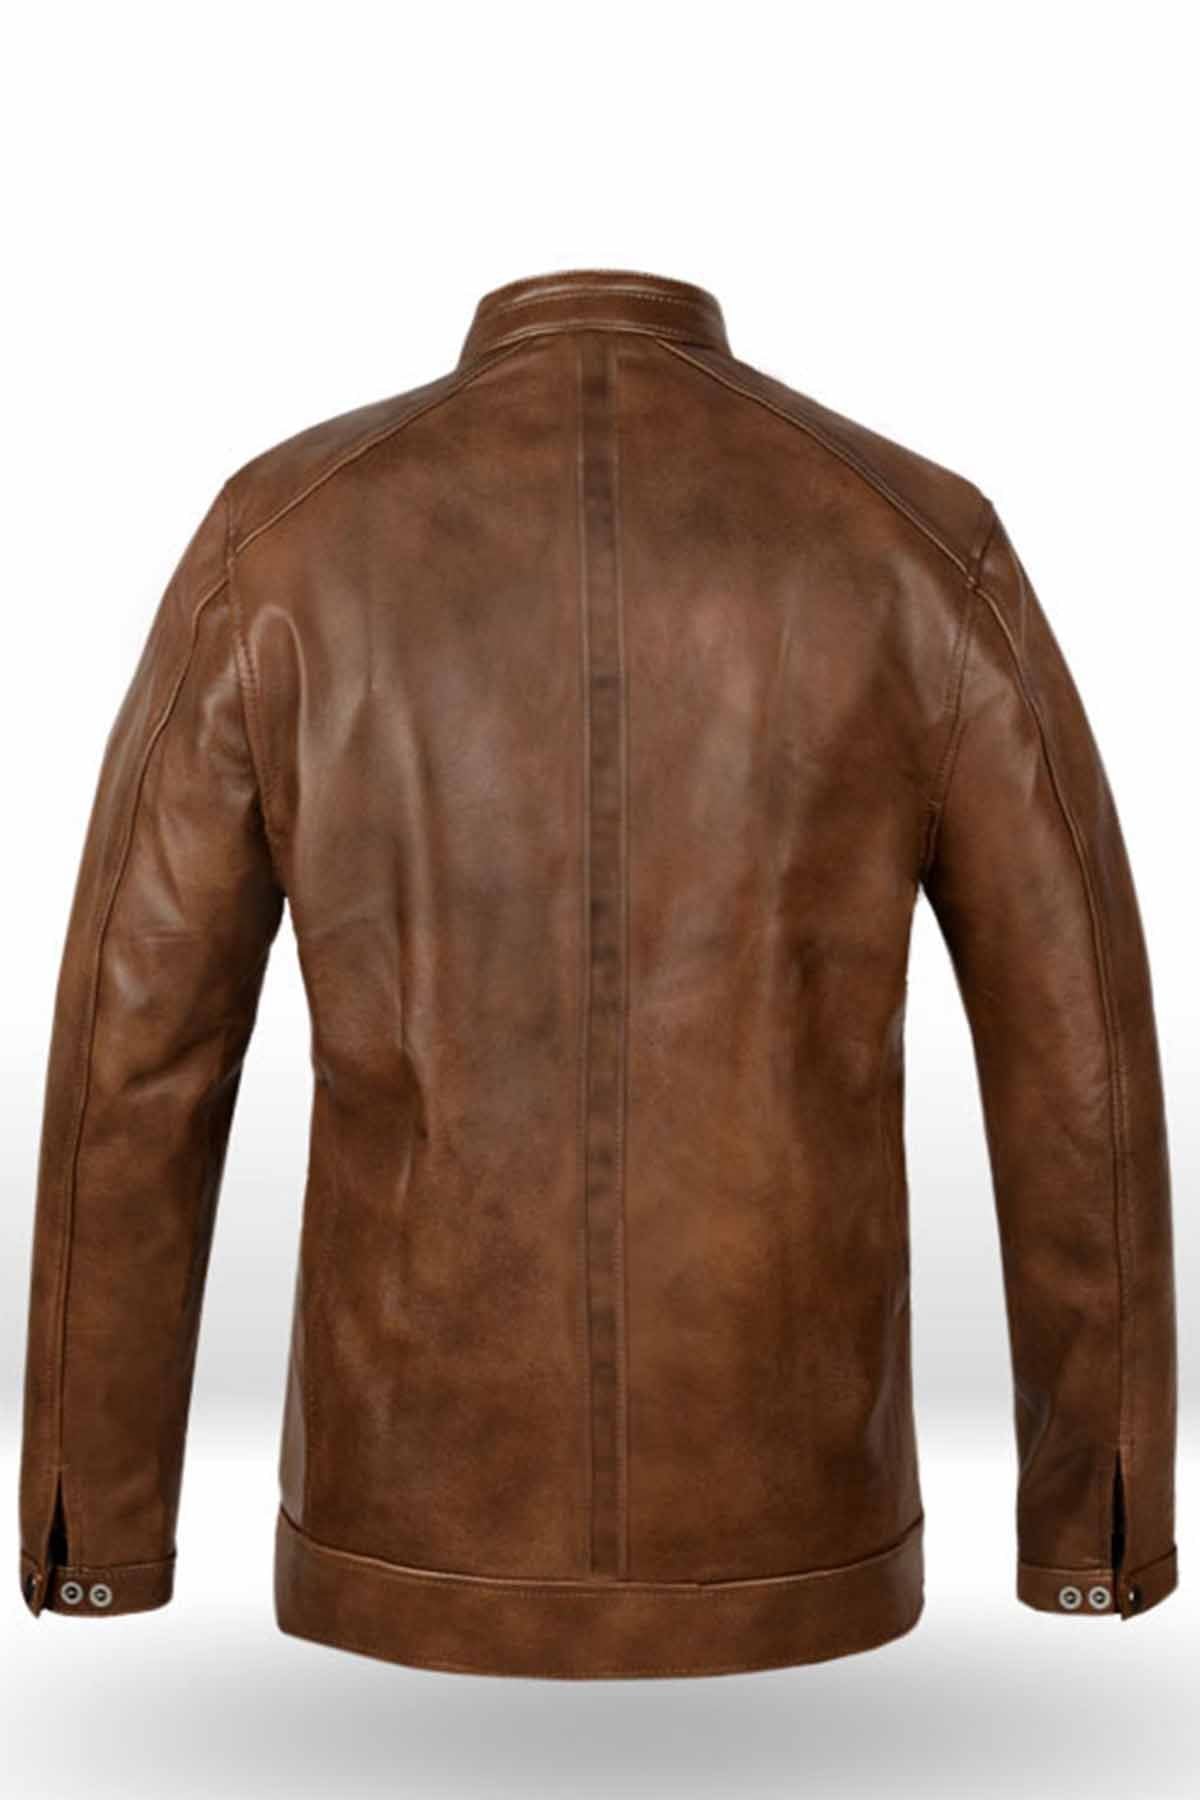 Epic Scott Eastwood Overdrive Leather Jacket For Men’s